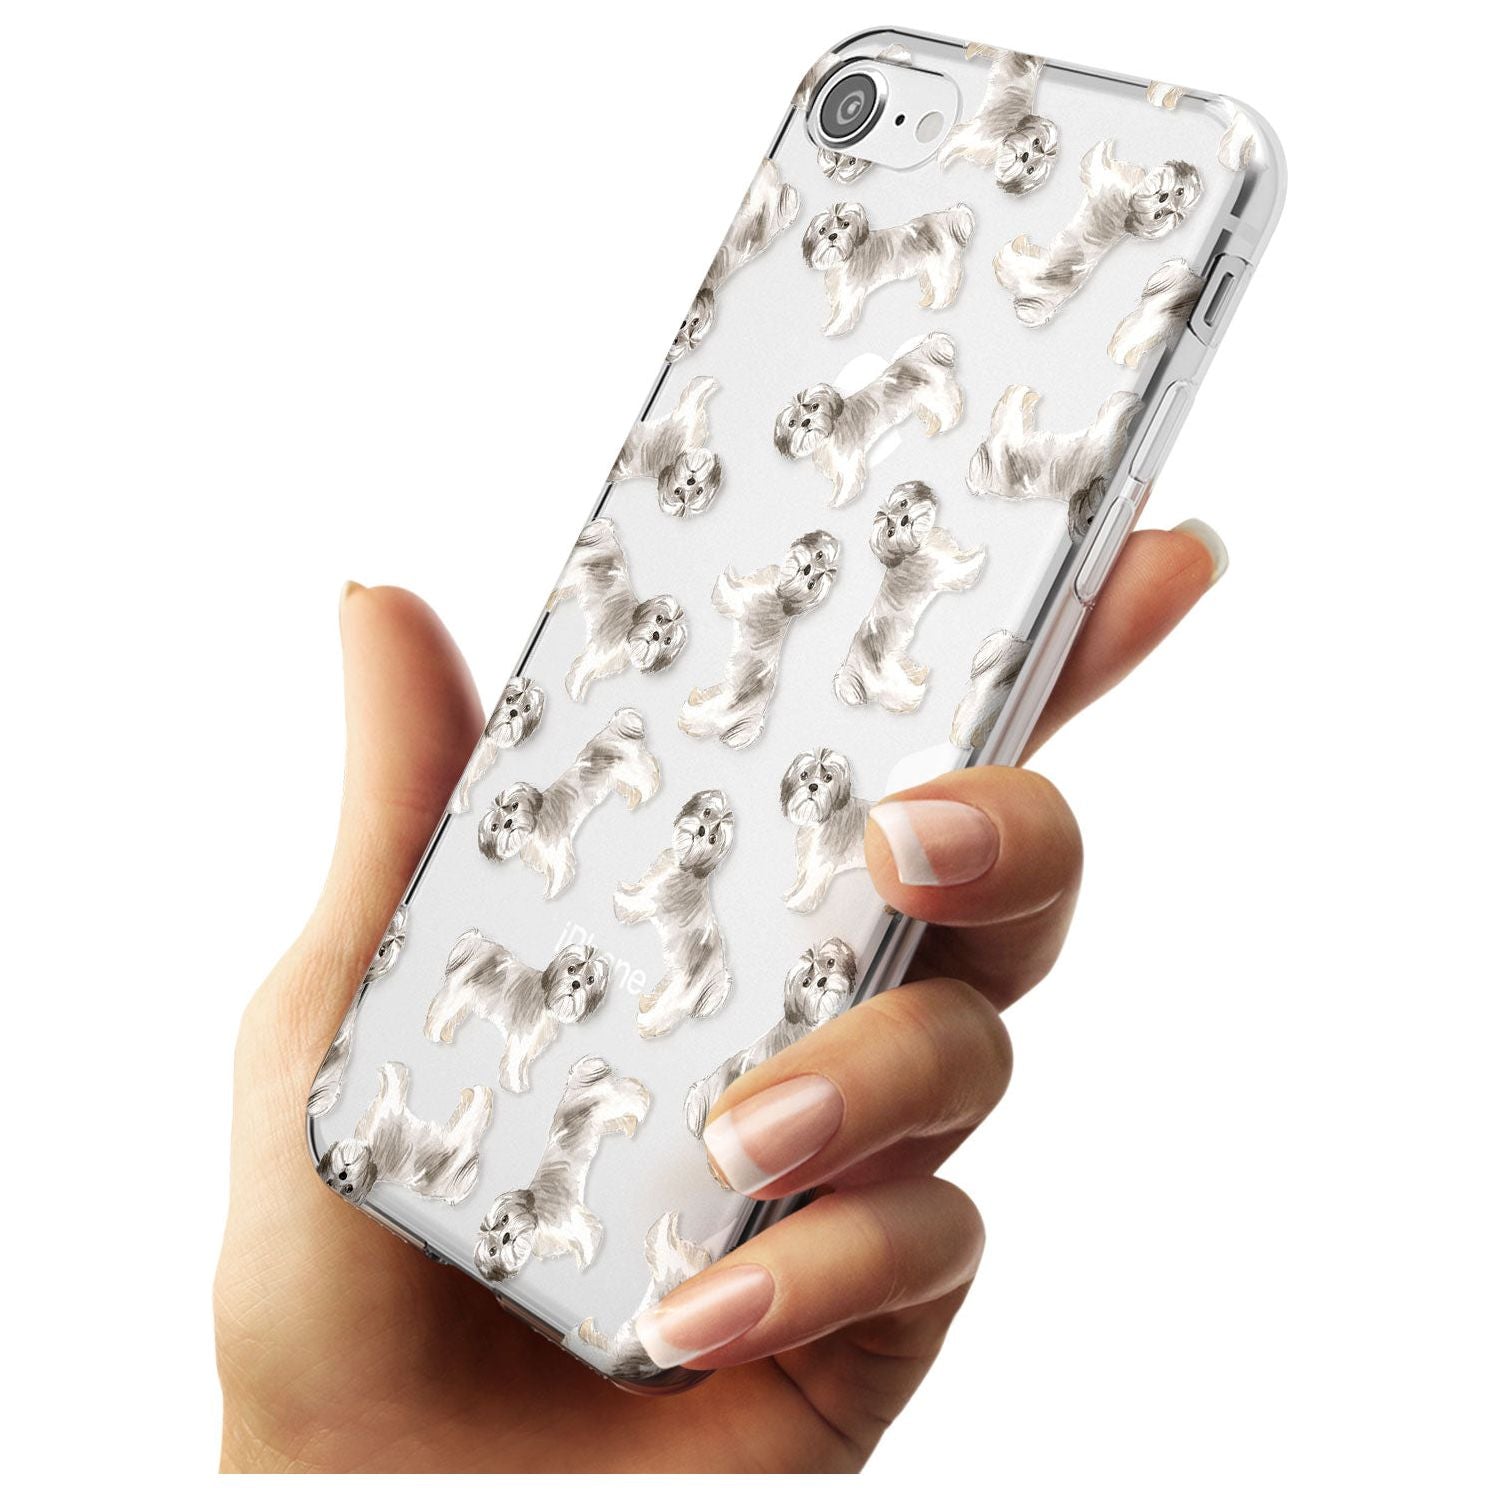 Shih tzu (Short Hair) Watercolour Dog Pattern Slim TPU Phone Case for iPhone SE 8 7 Plus